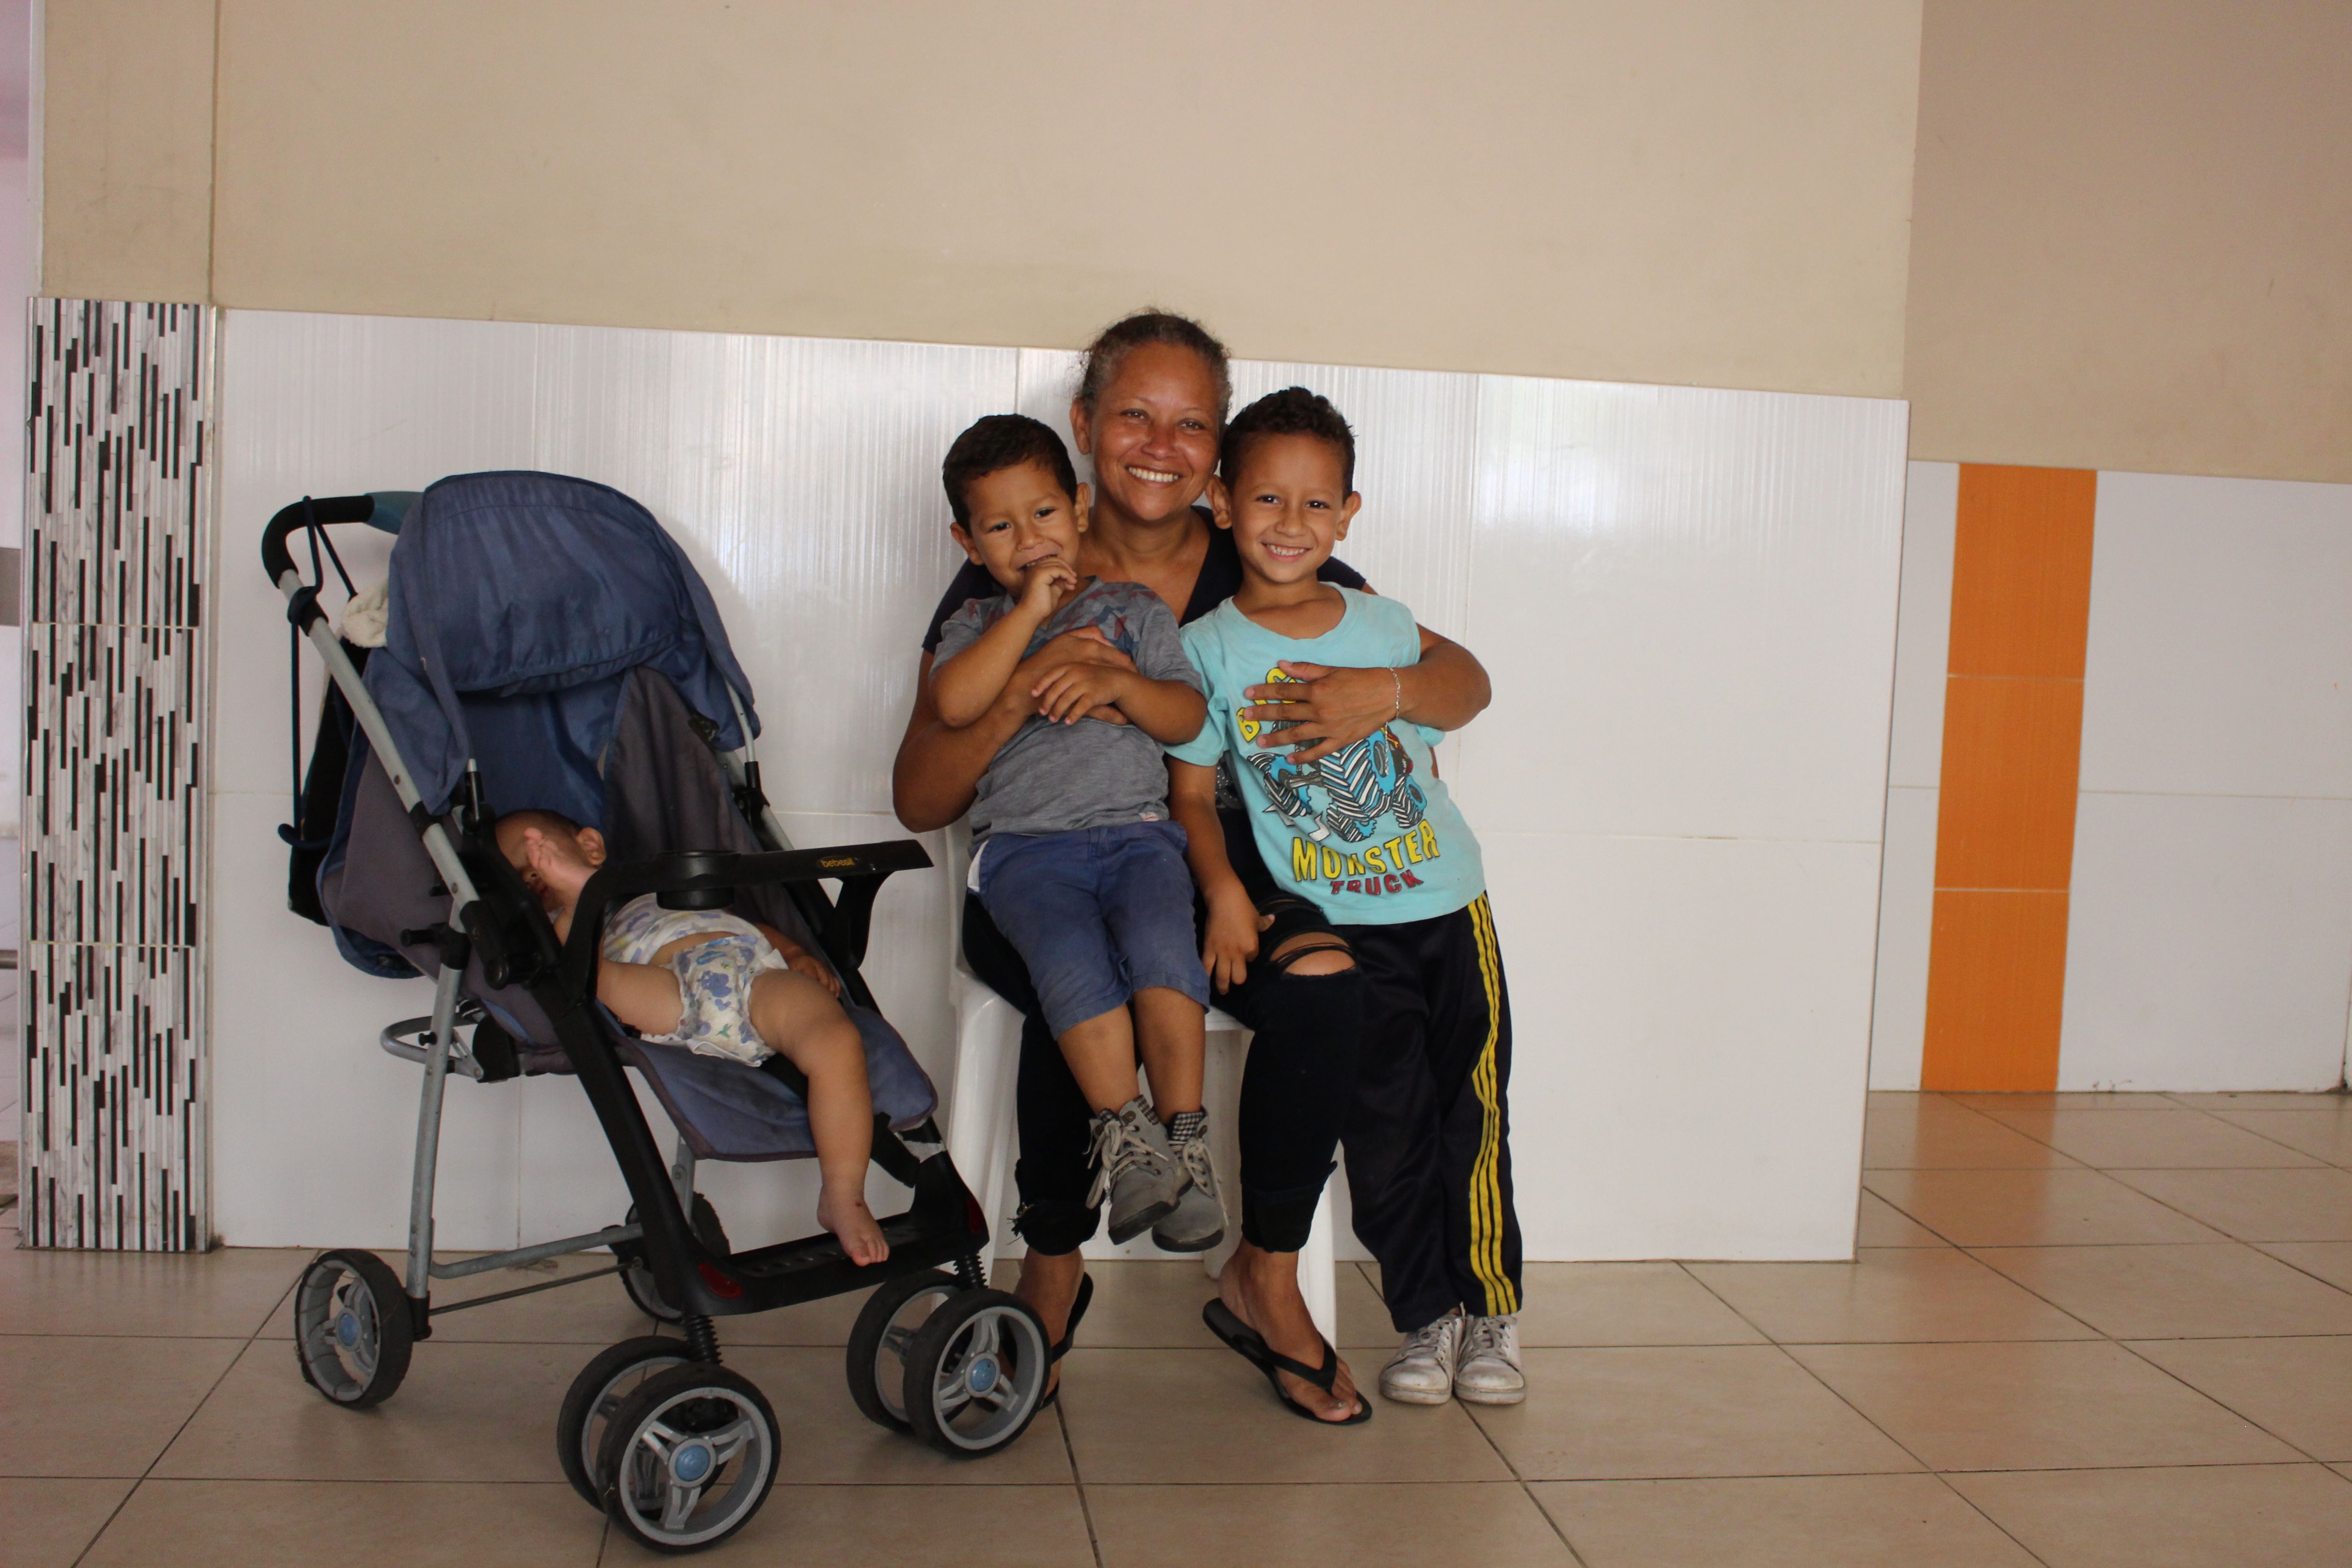 Venezia poses with her three children at Centro de Migraciones, a shelter run by Mision Scalabrini. Image by Mariana Rivas. Colombia, 2019.